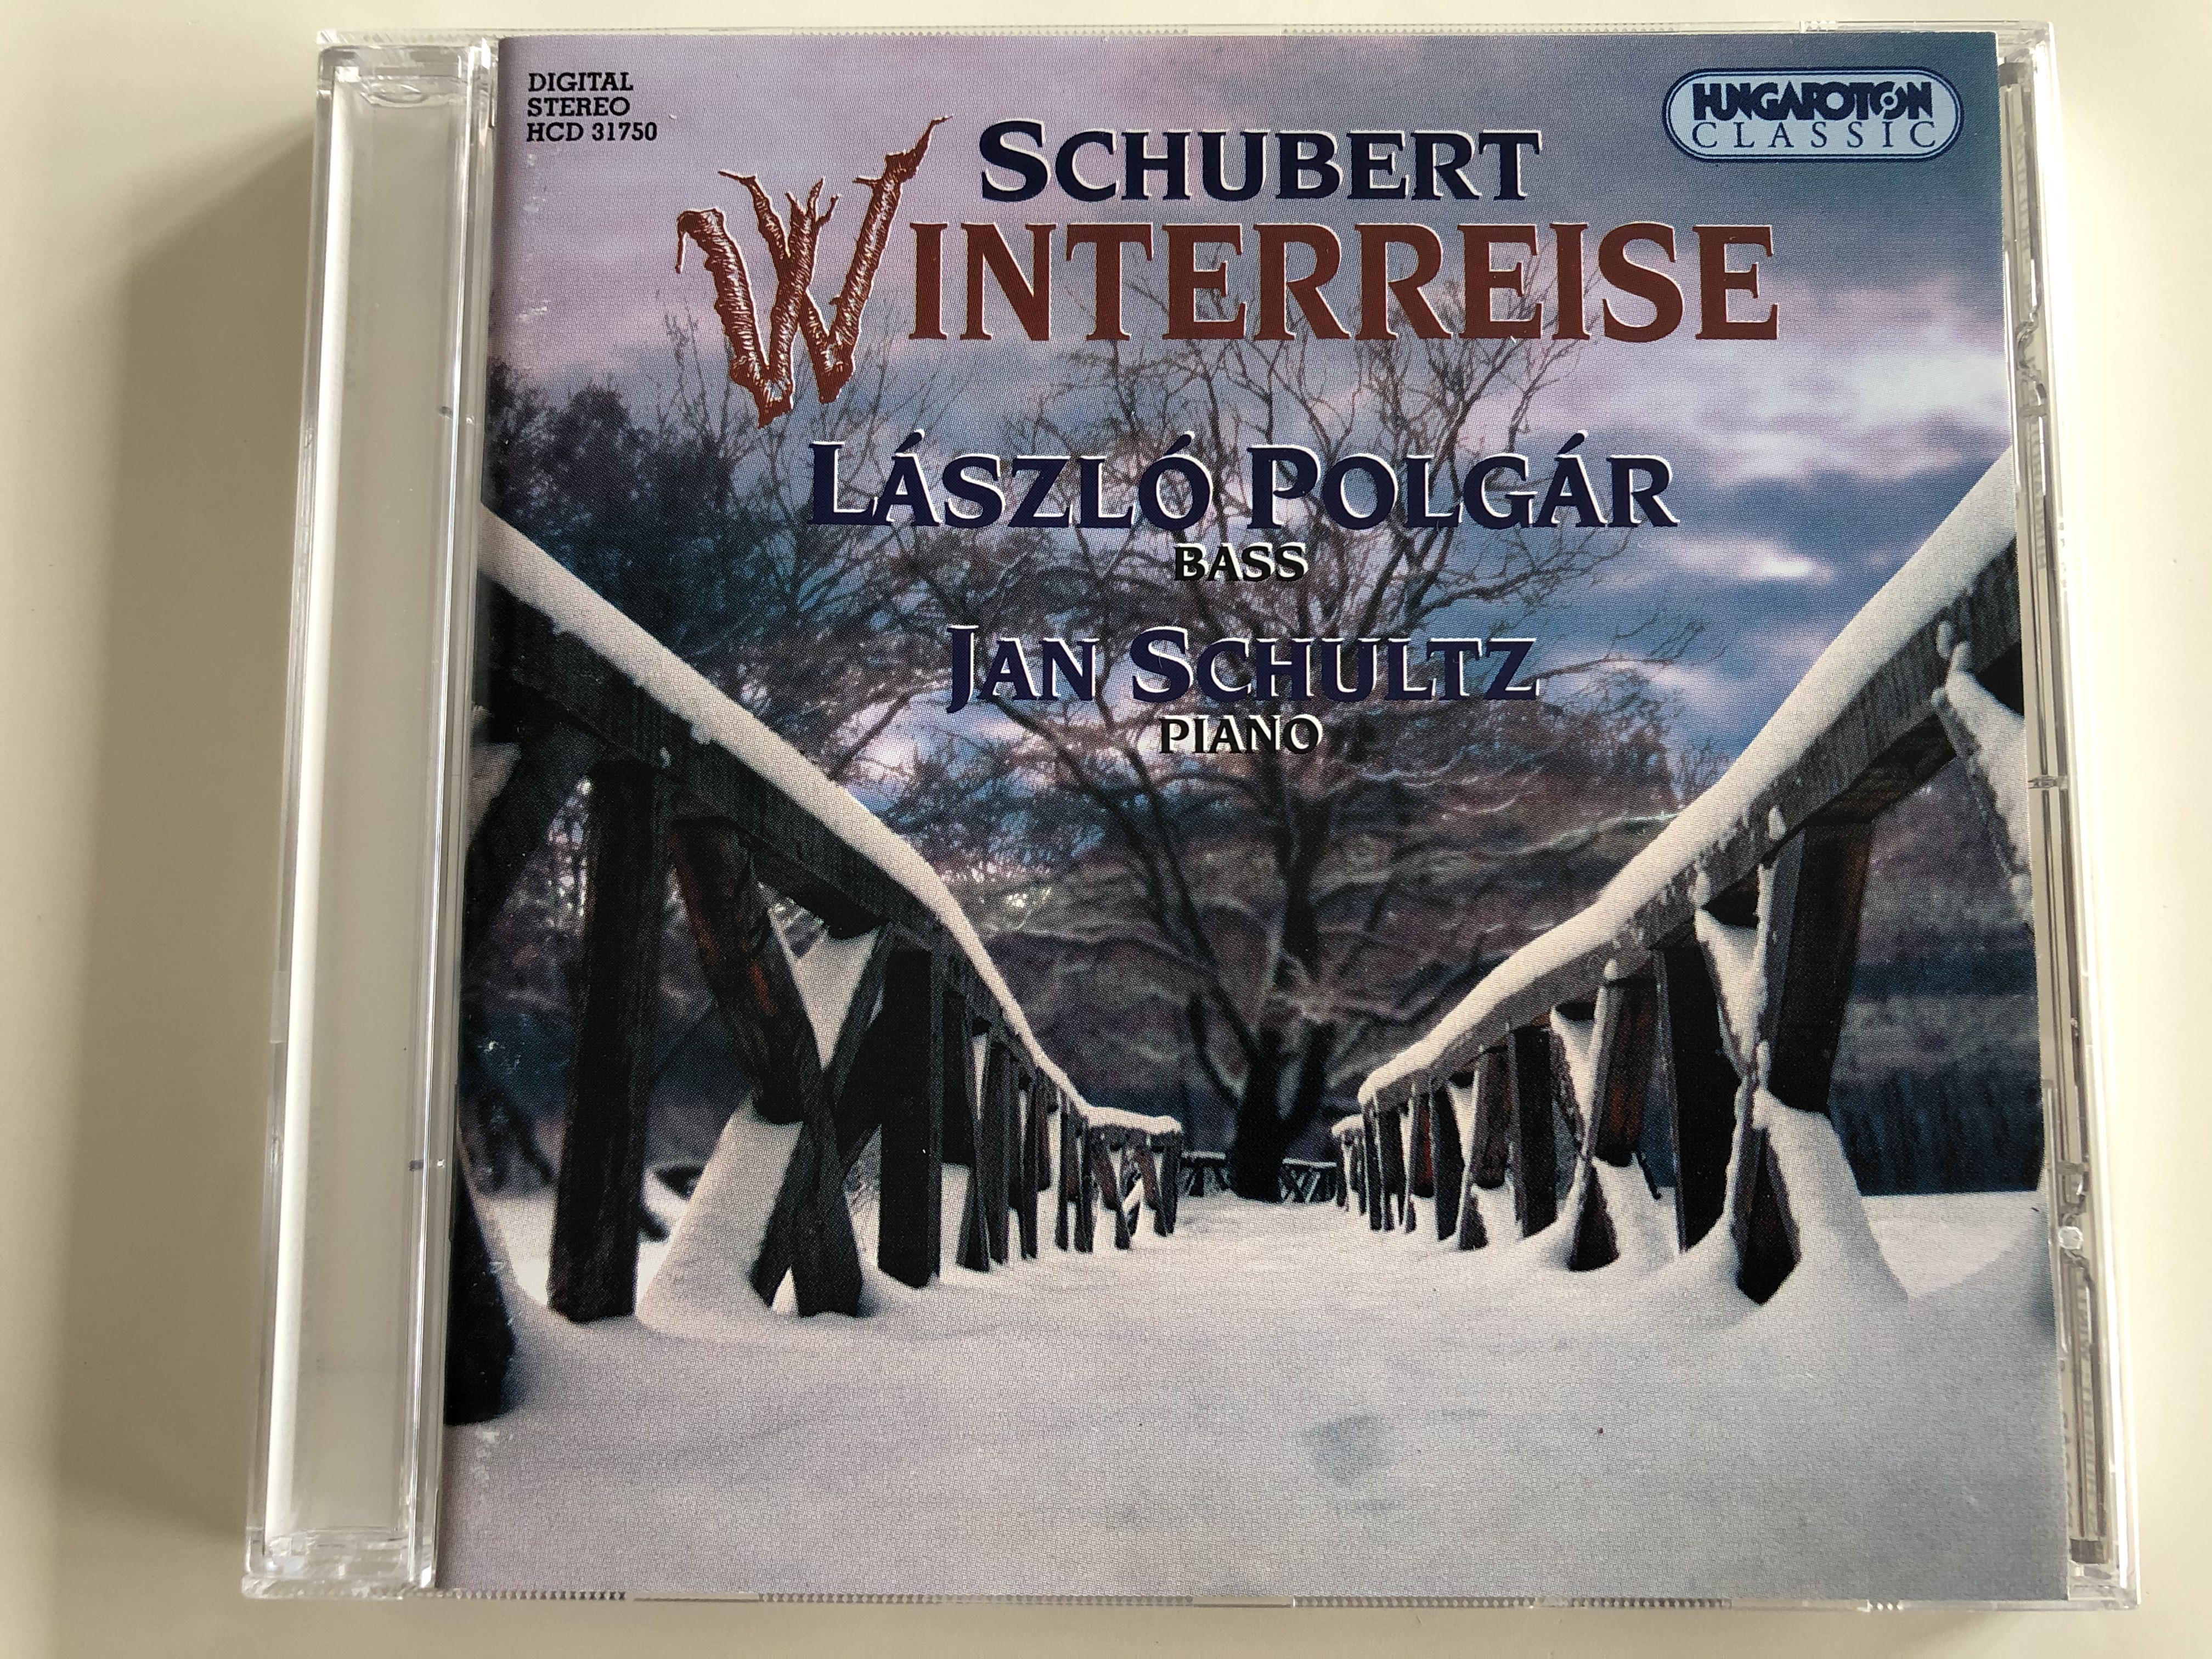 schubert-winterreise-laszlo-polgar-bass-jan-schultz-piano-hungaroton-classic-audio-cd-1998-stereo-hcd-31750-1-.jpg